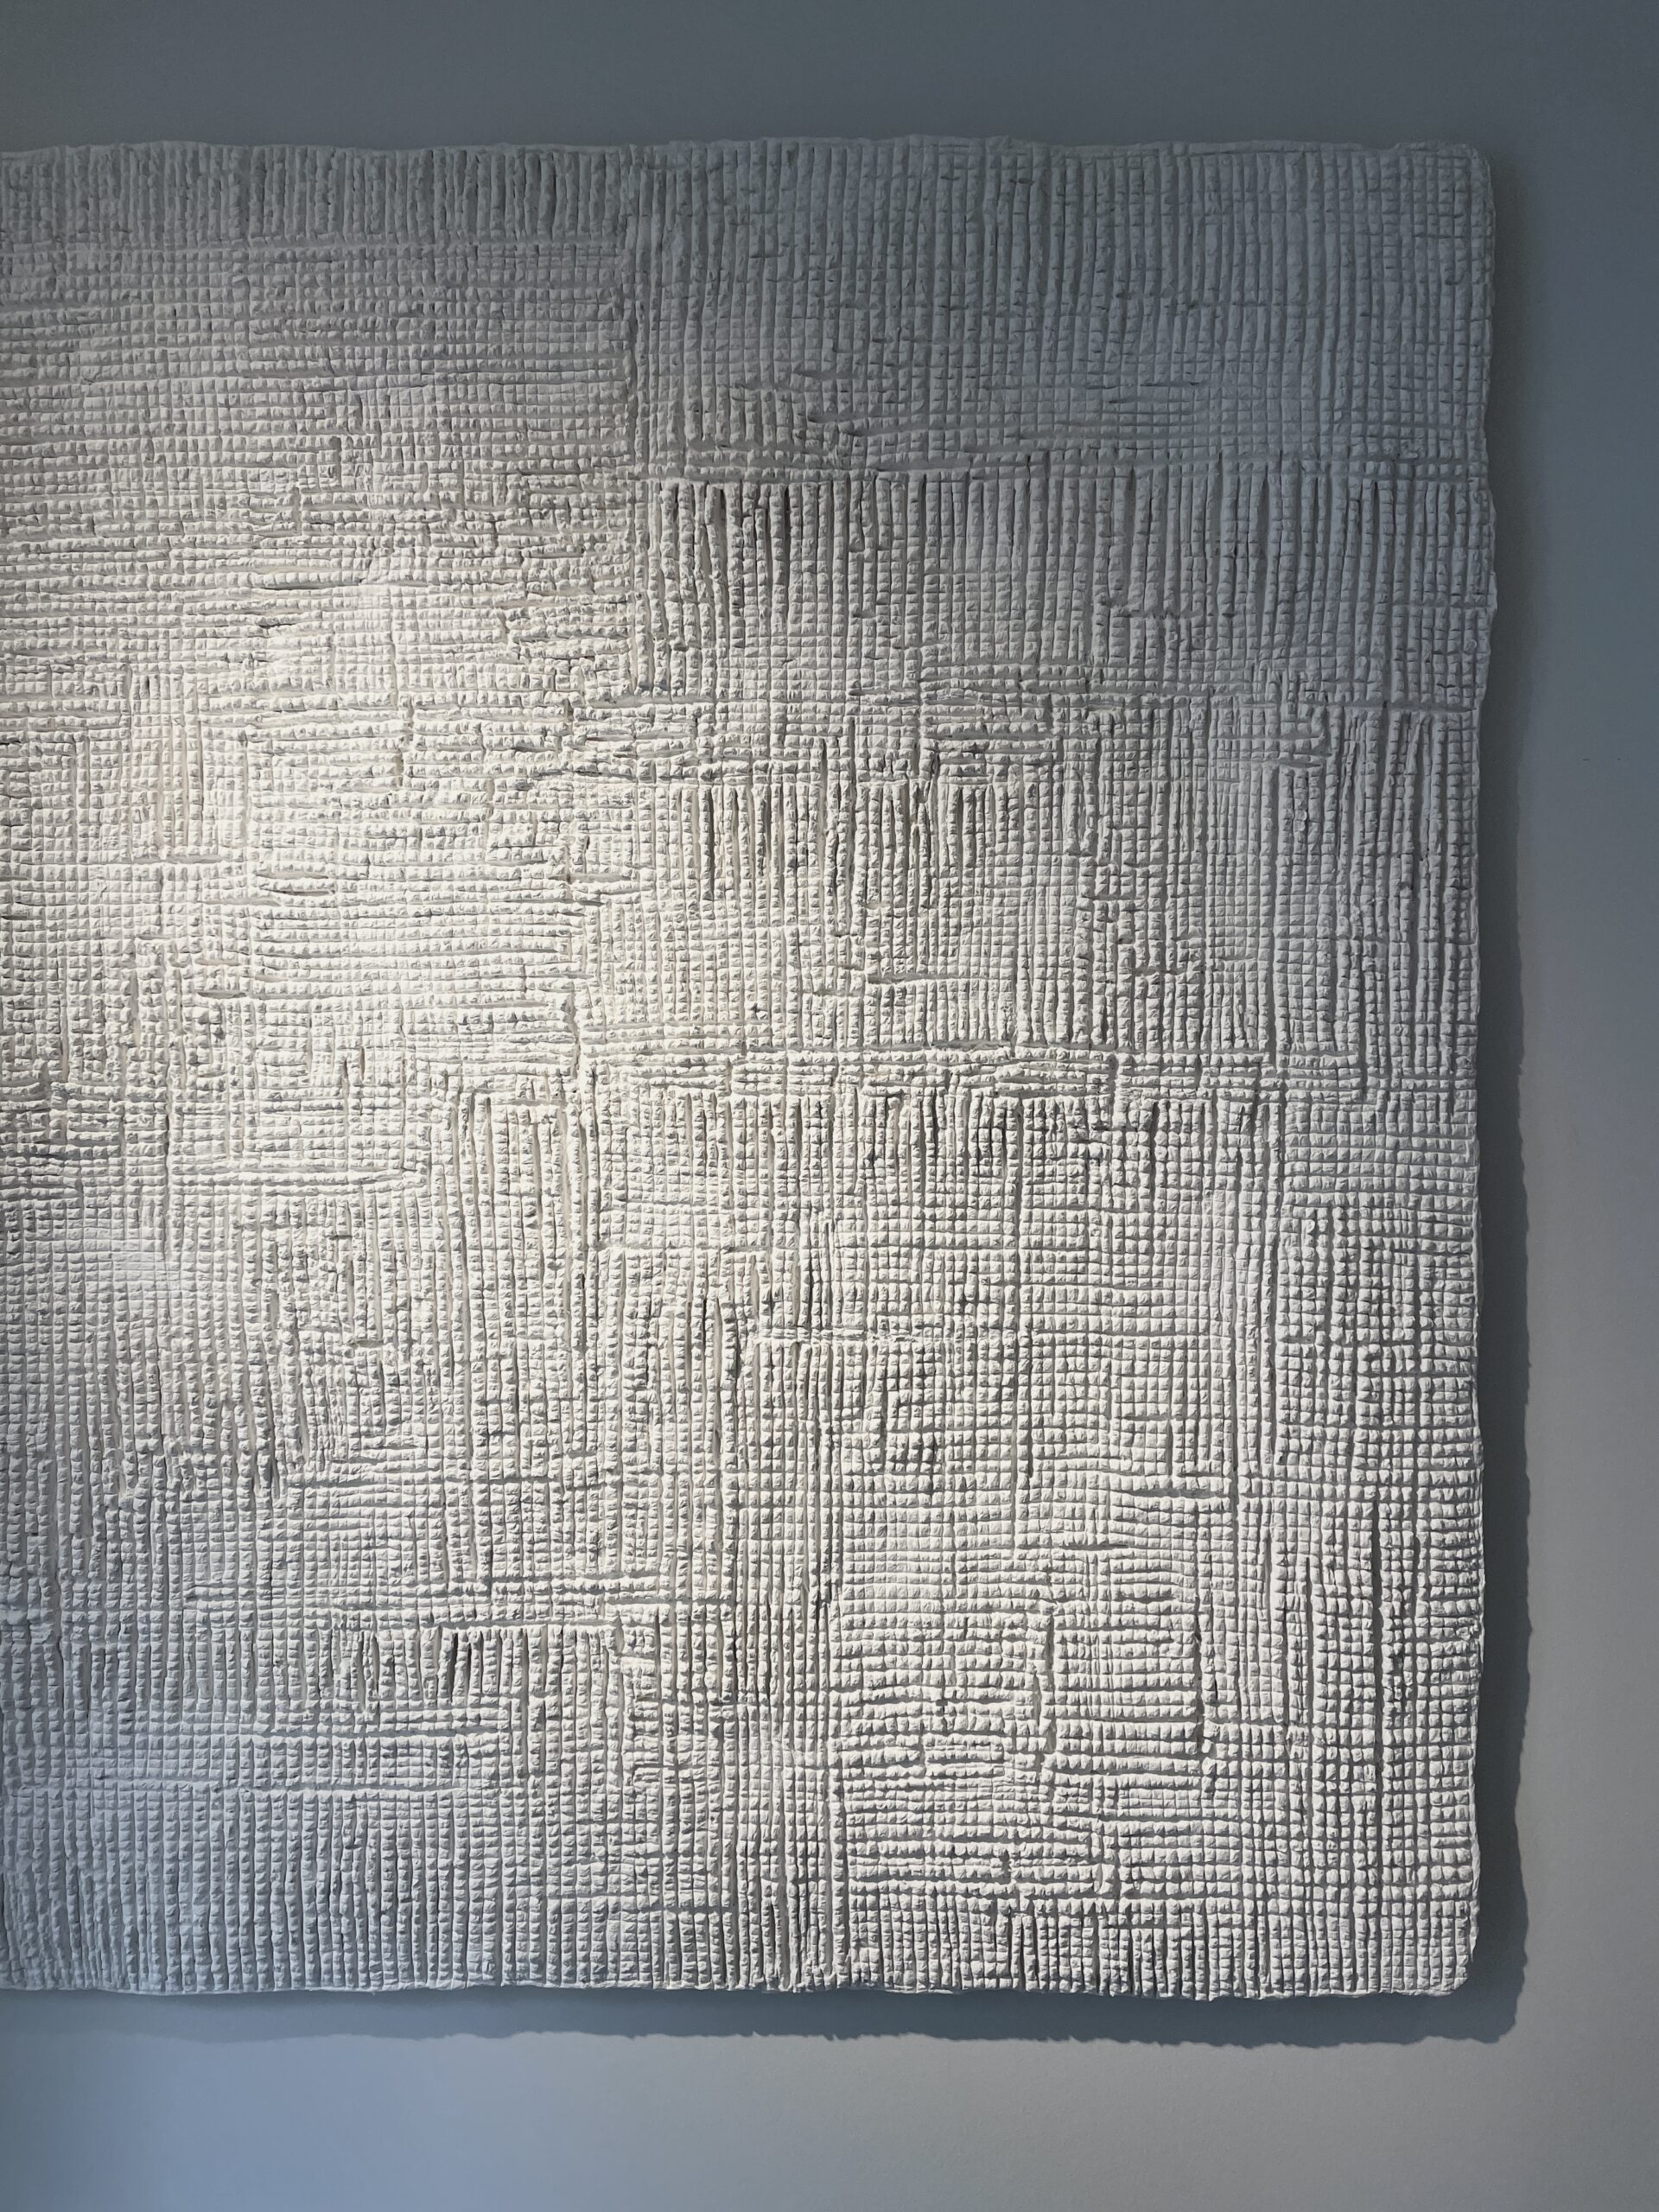 Forwart Gallery Jan Schoonhoven Jr 115 x 115 cm White Wave Detail